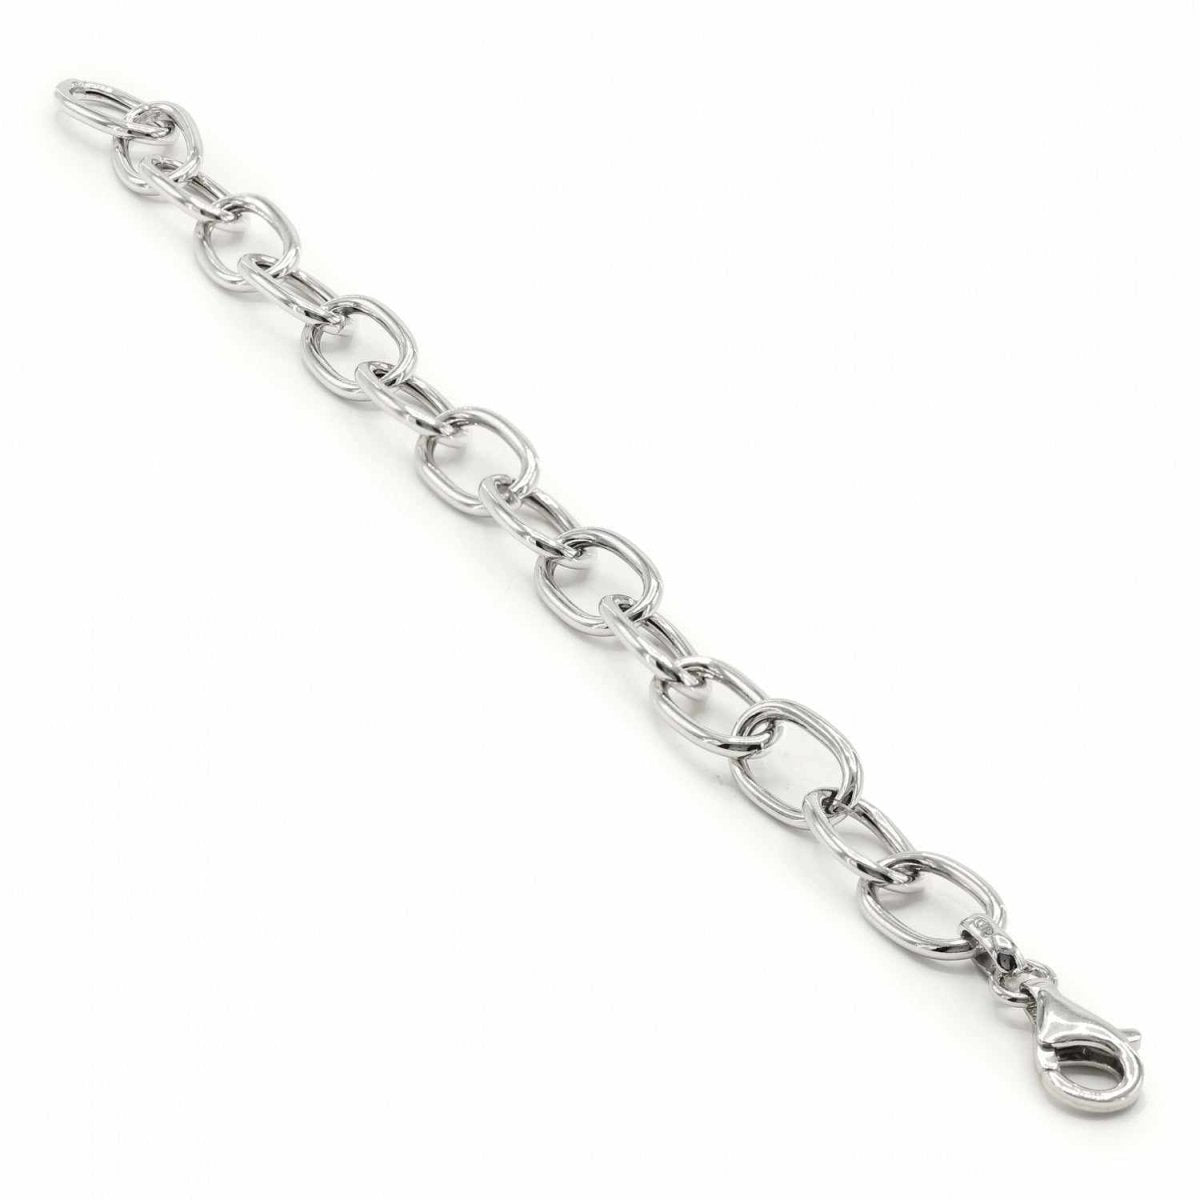 Bracelet - Silver link bracelet plain chain design